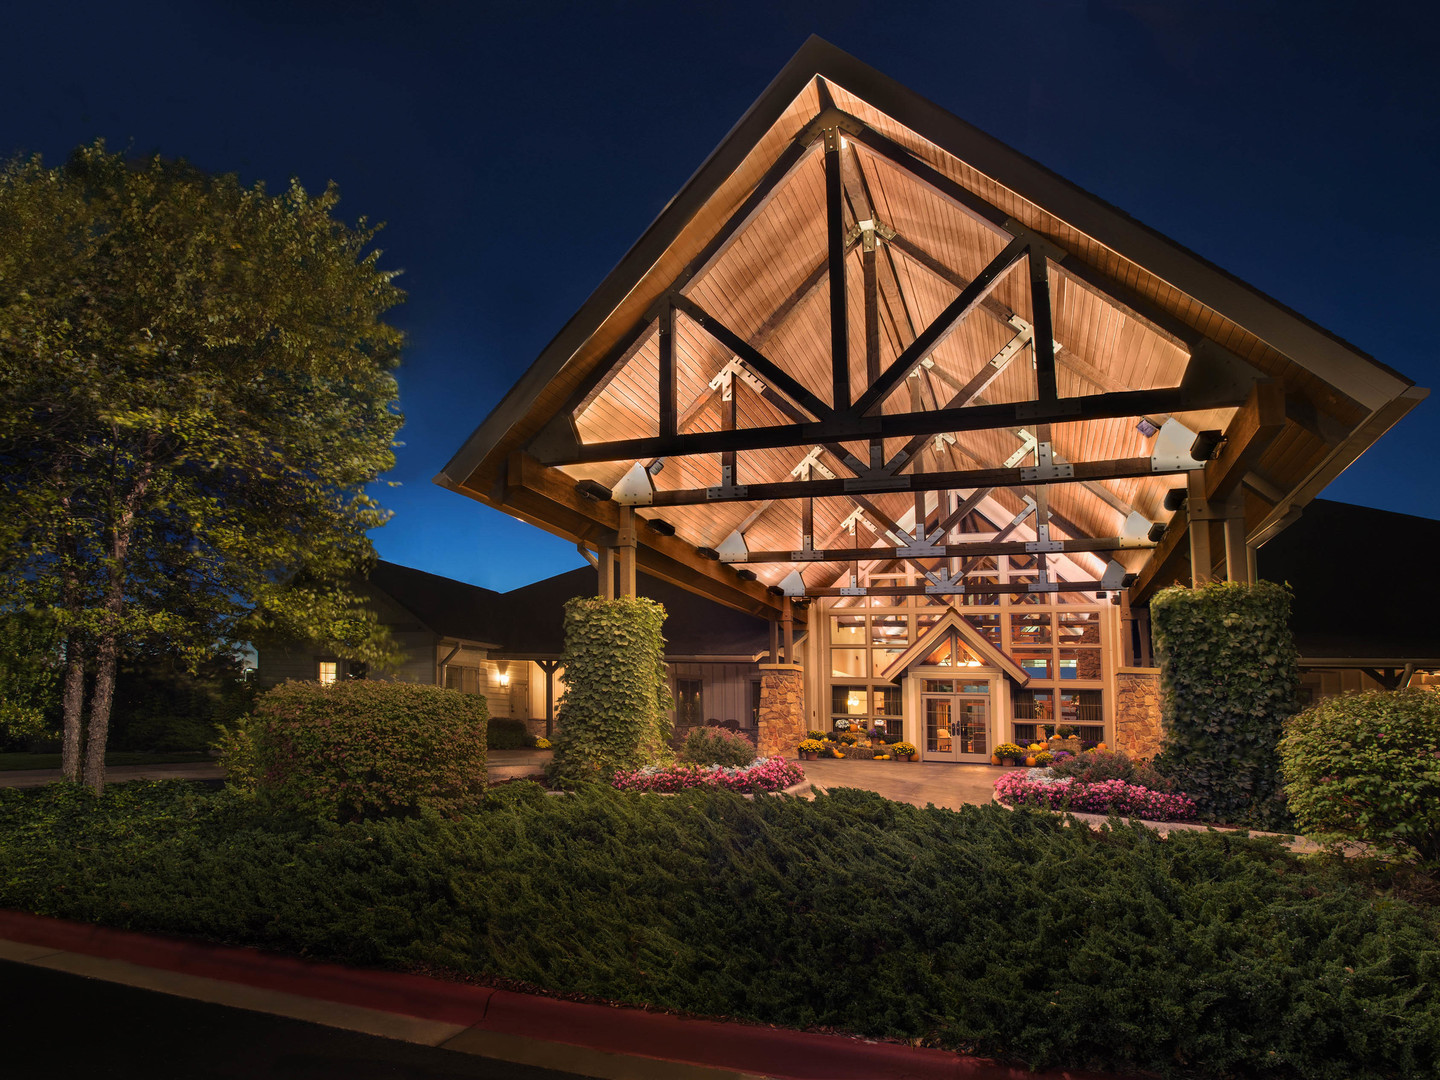 Marriott's Willow Ridge Lodge Epic Resort Entrance. Marriott's Willow Ridge Lodge is located in Branson, Missouri United States.